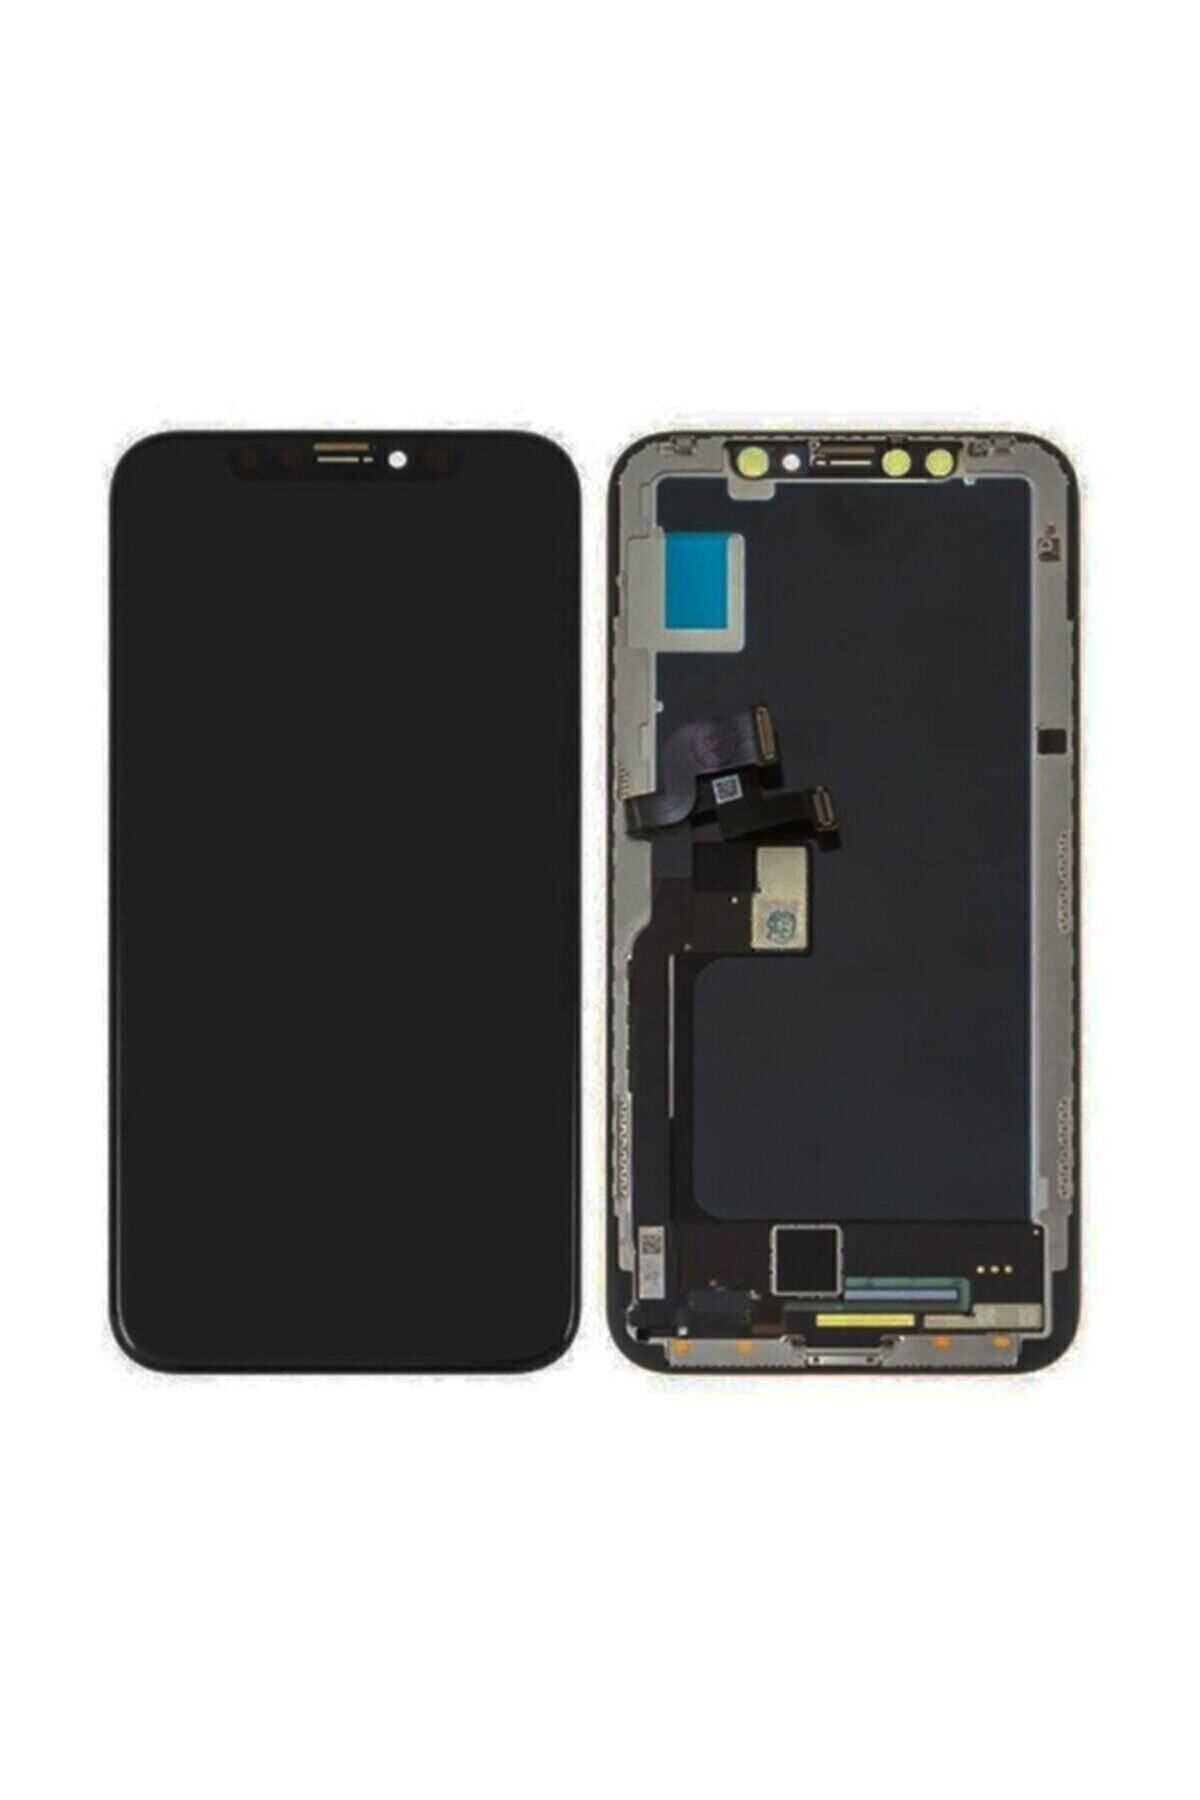 Genel Markalar Iphone X Uyumlu Siyah Oled Lcd Ekran Ve Dokunmatik 100112